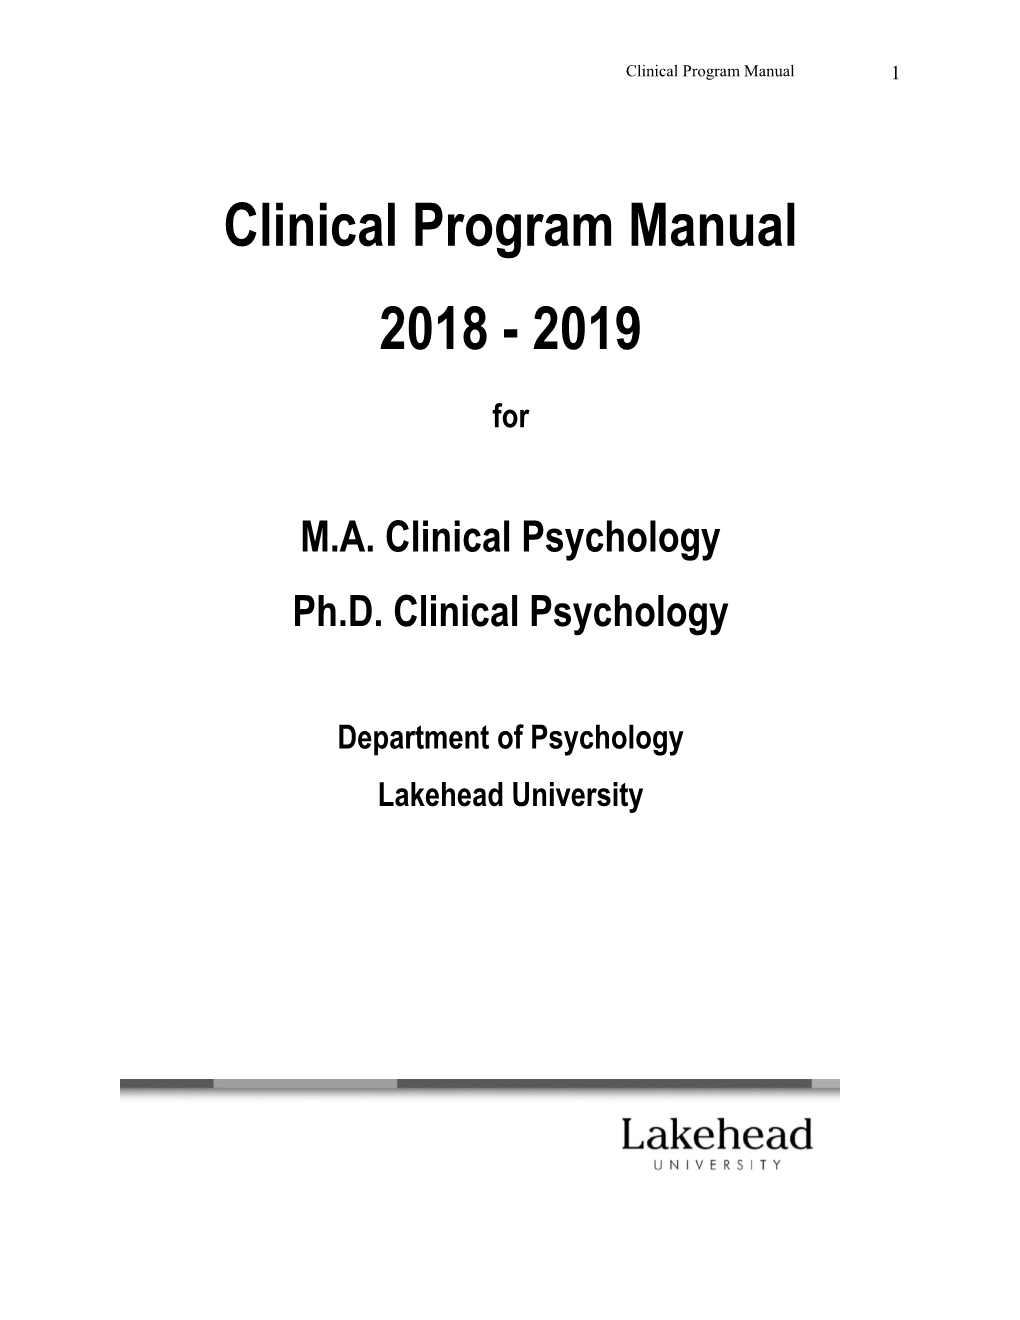 Clinical Program Manual 2018